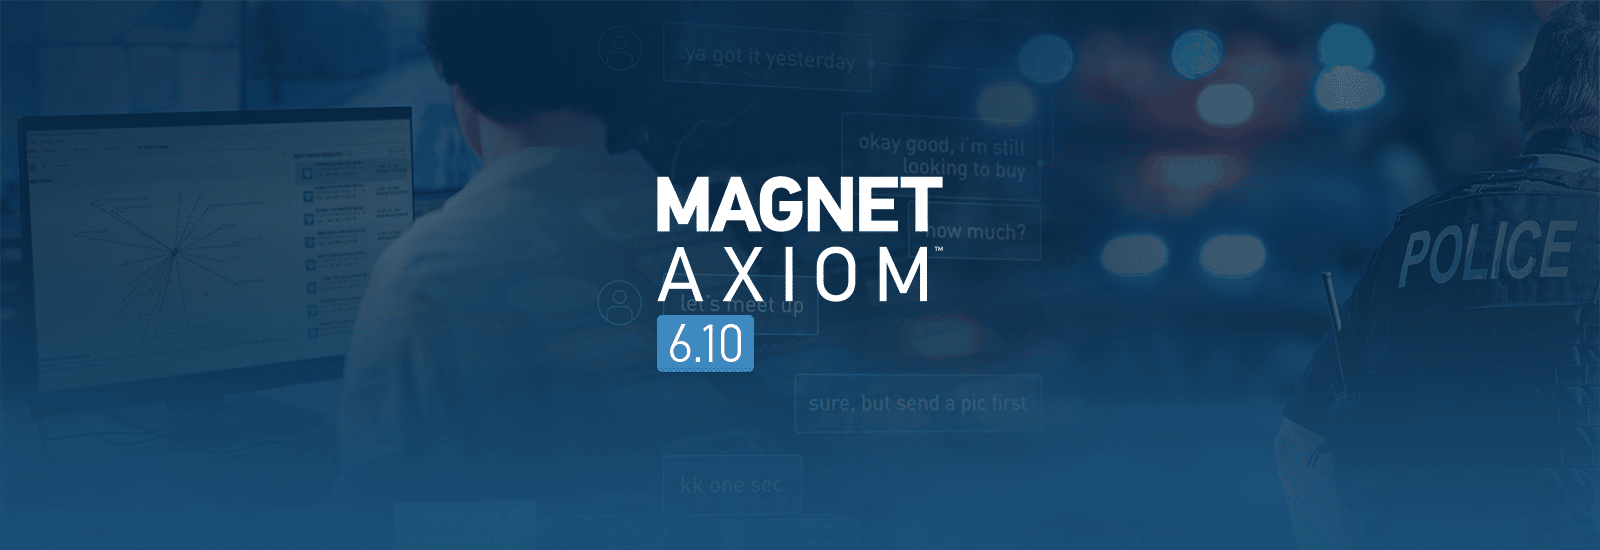 Magnet AXIOM 6.10